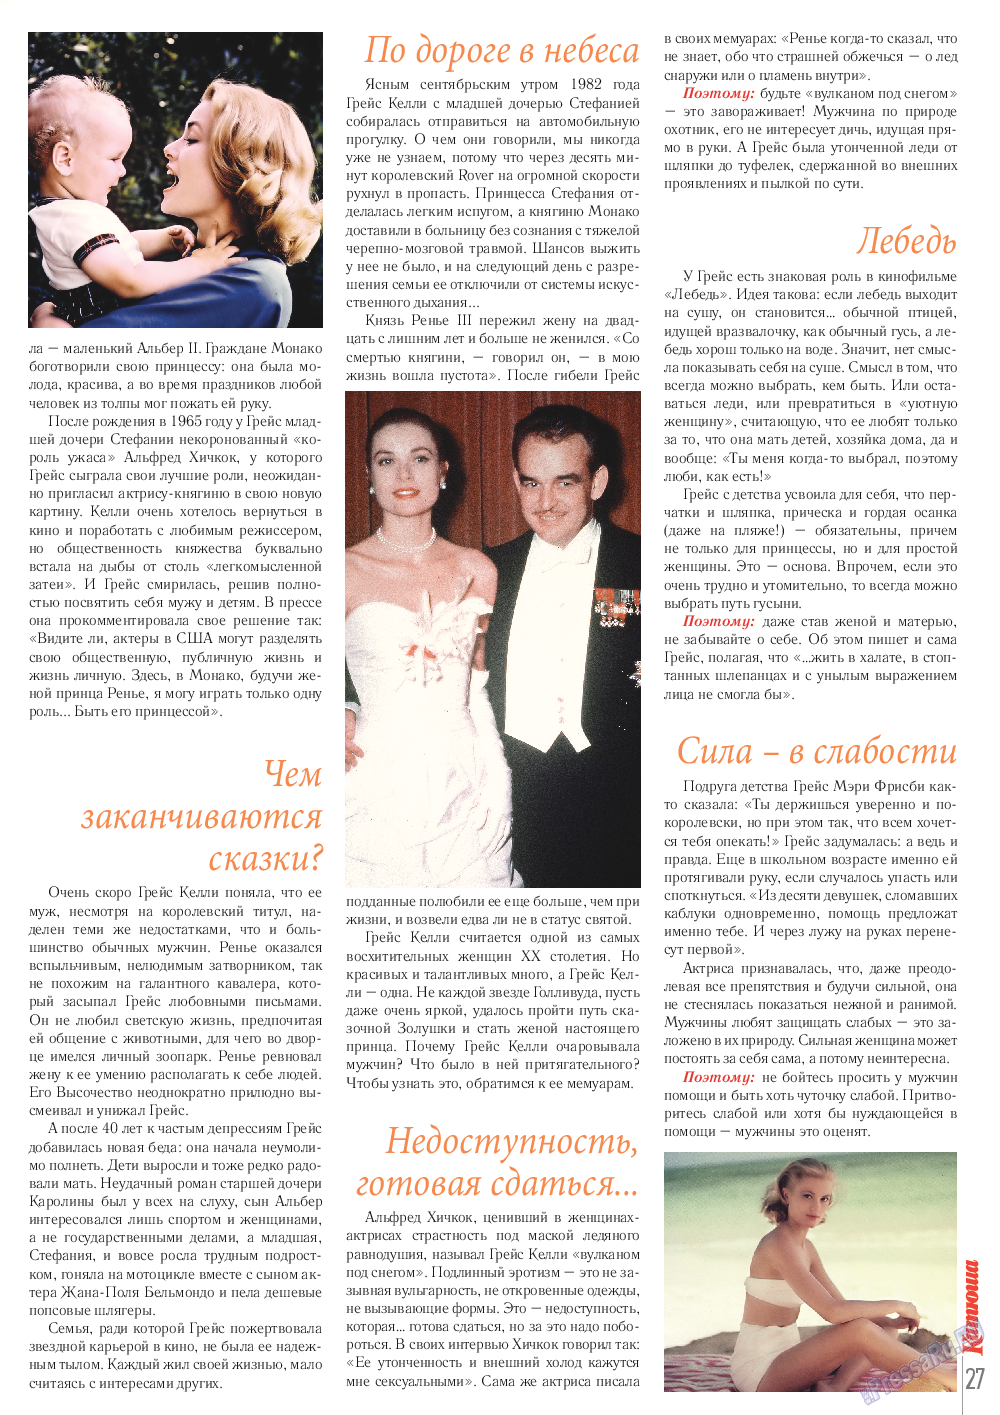 Катюша, журнал. 2014 №40 стр.27